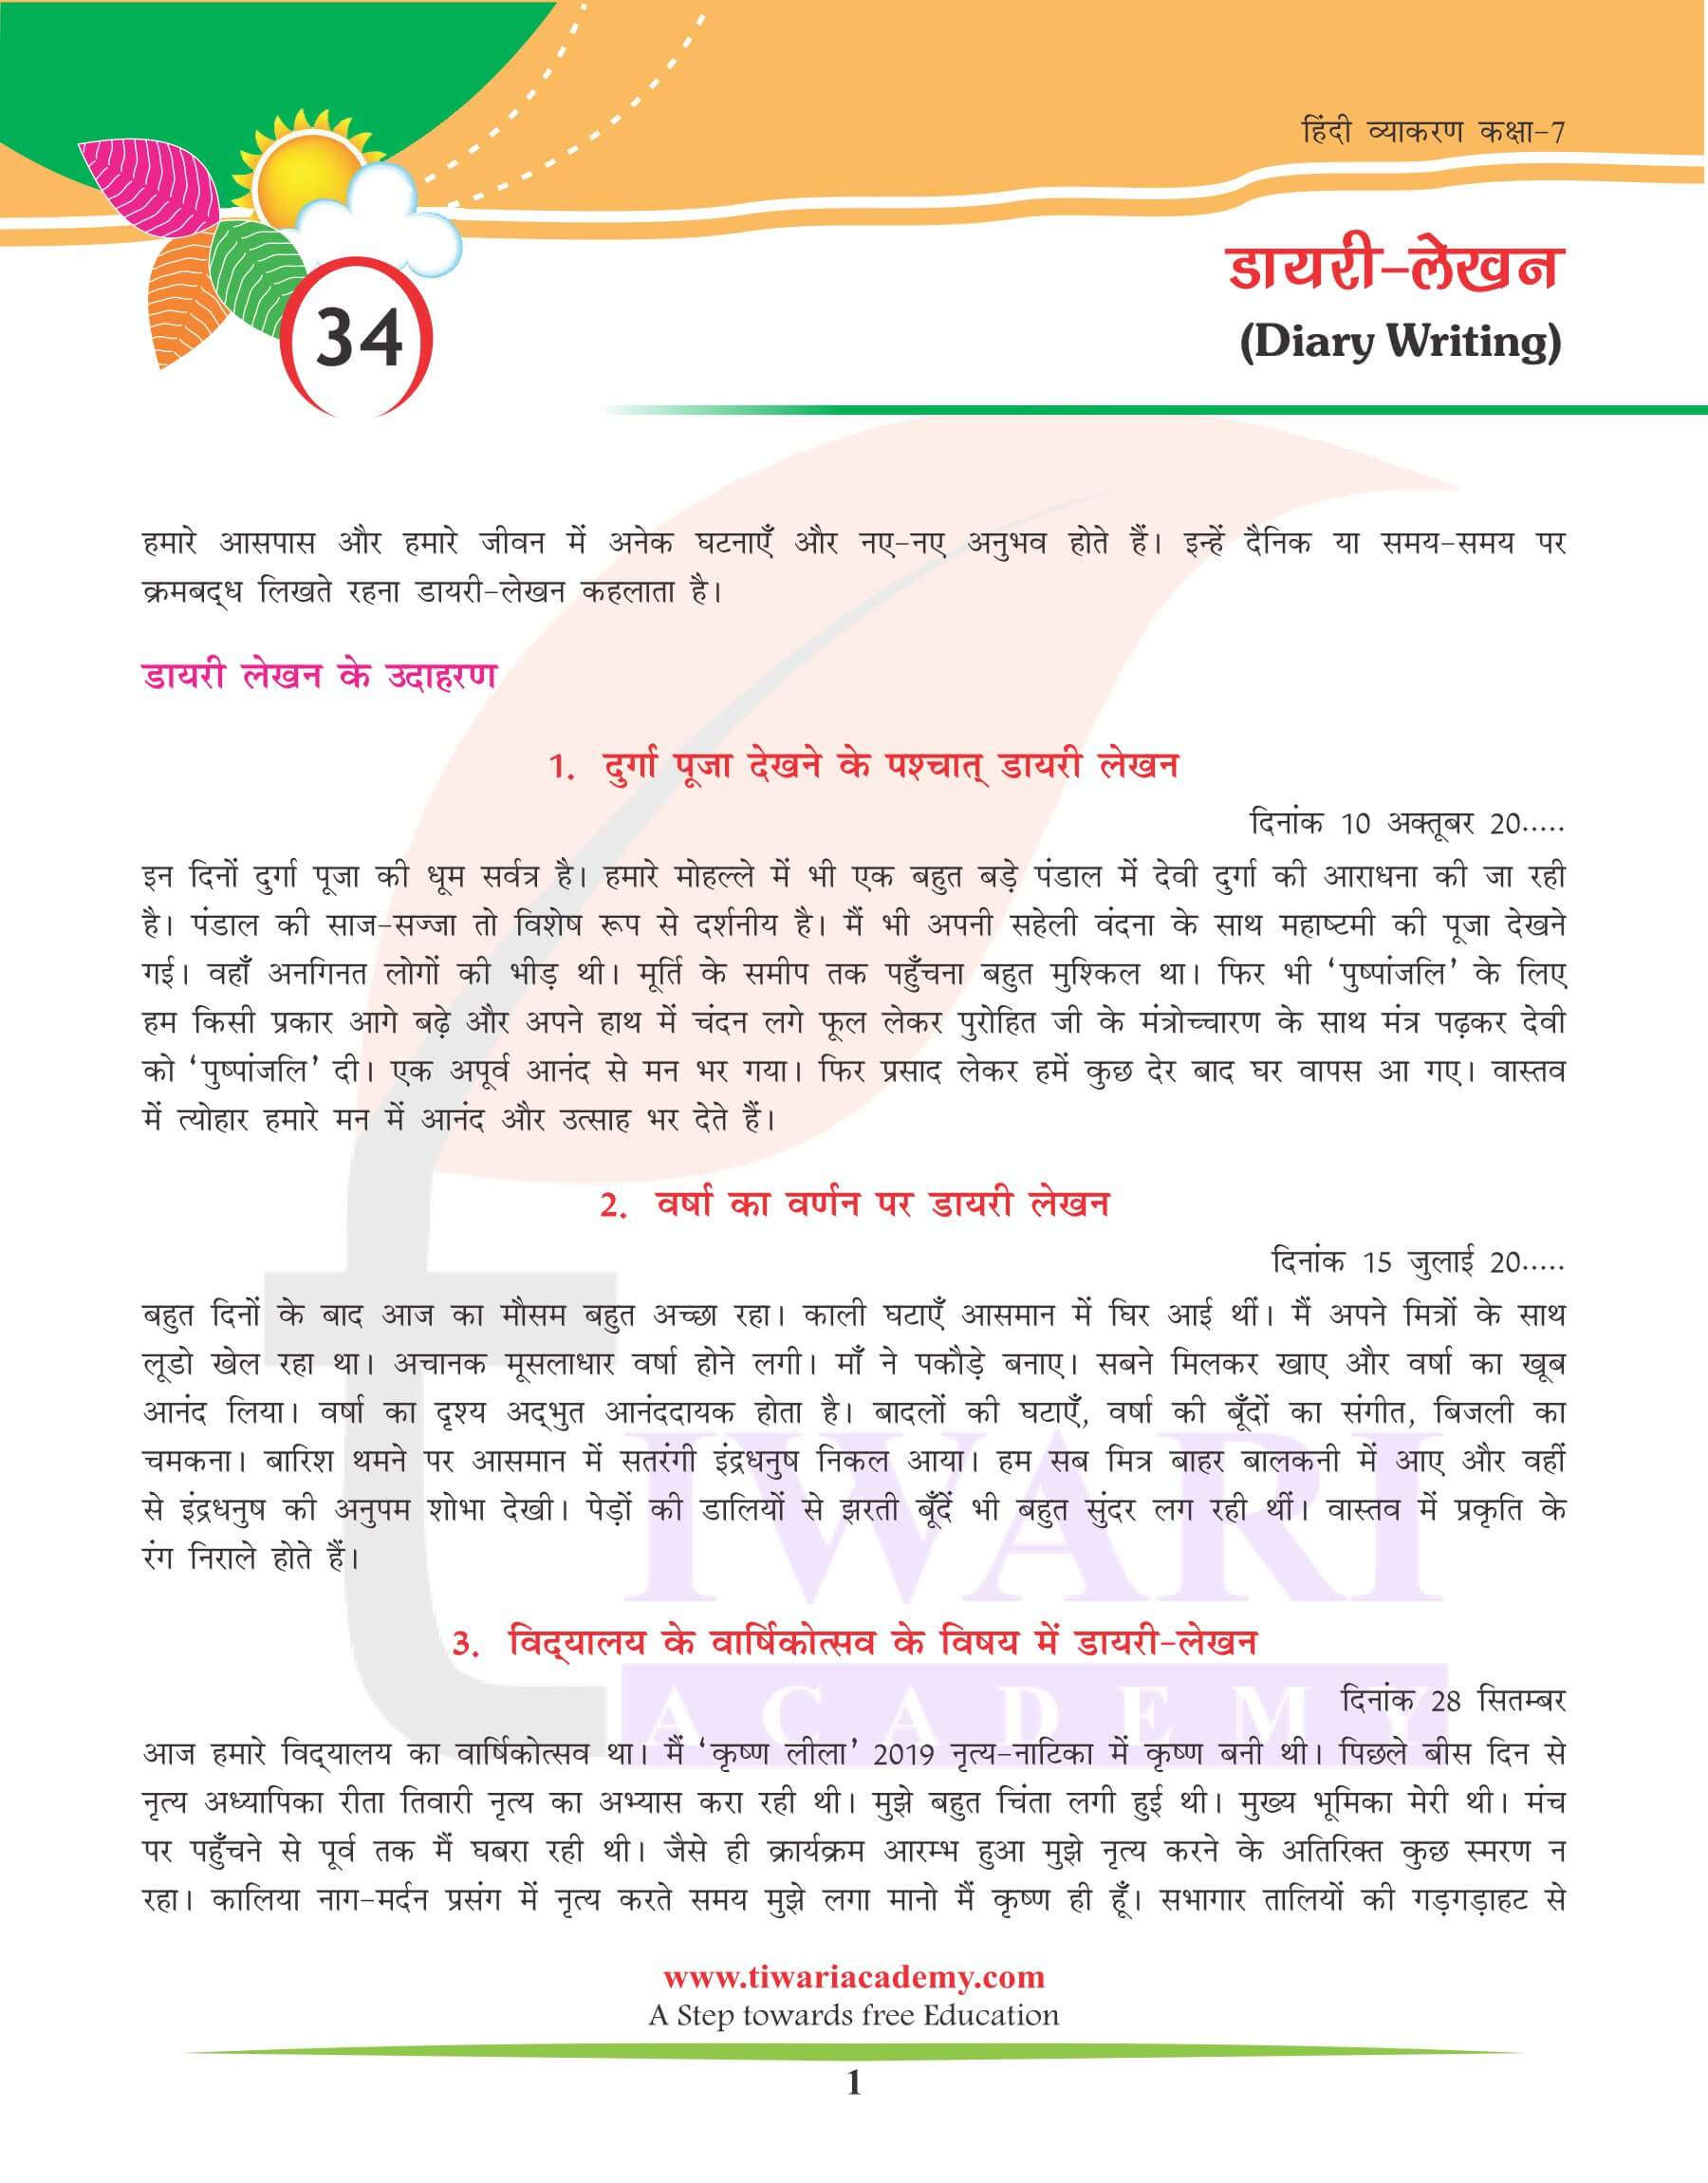 कक्षा 7 हिंदी व्याकरण डायरी लेखन